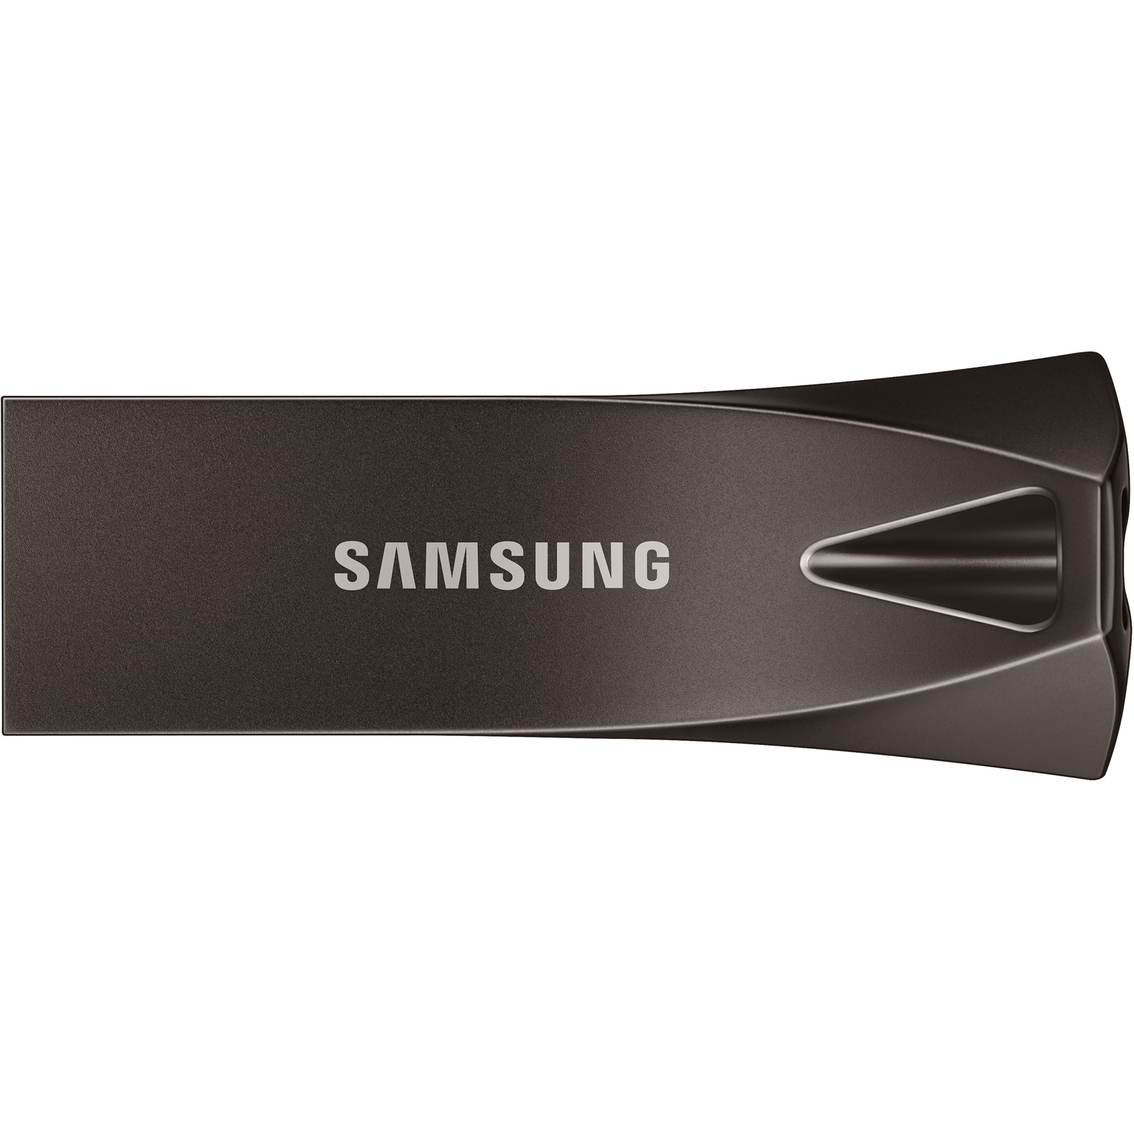 Samsung BAR Plus 256GB USB 3.1 Flash Drive - Image 3 of 3